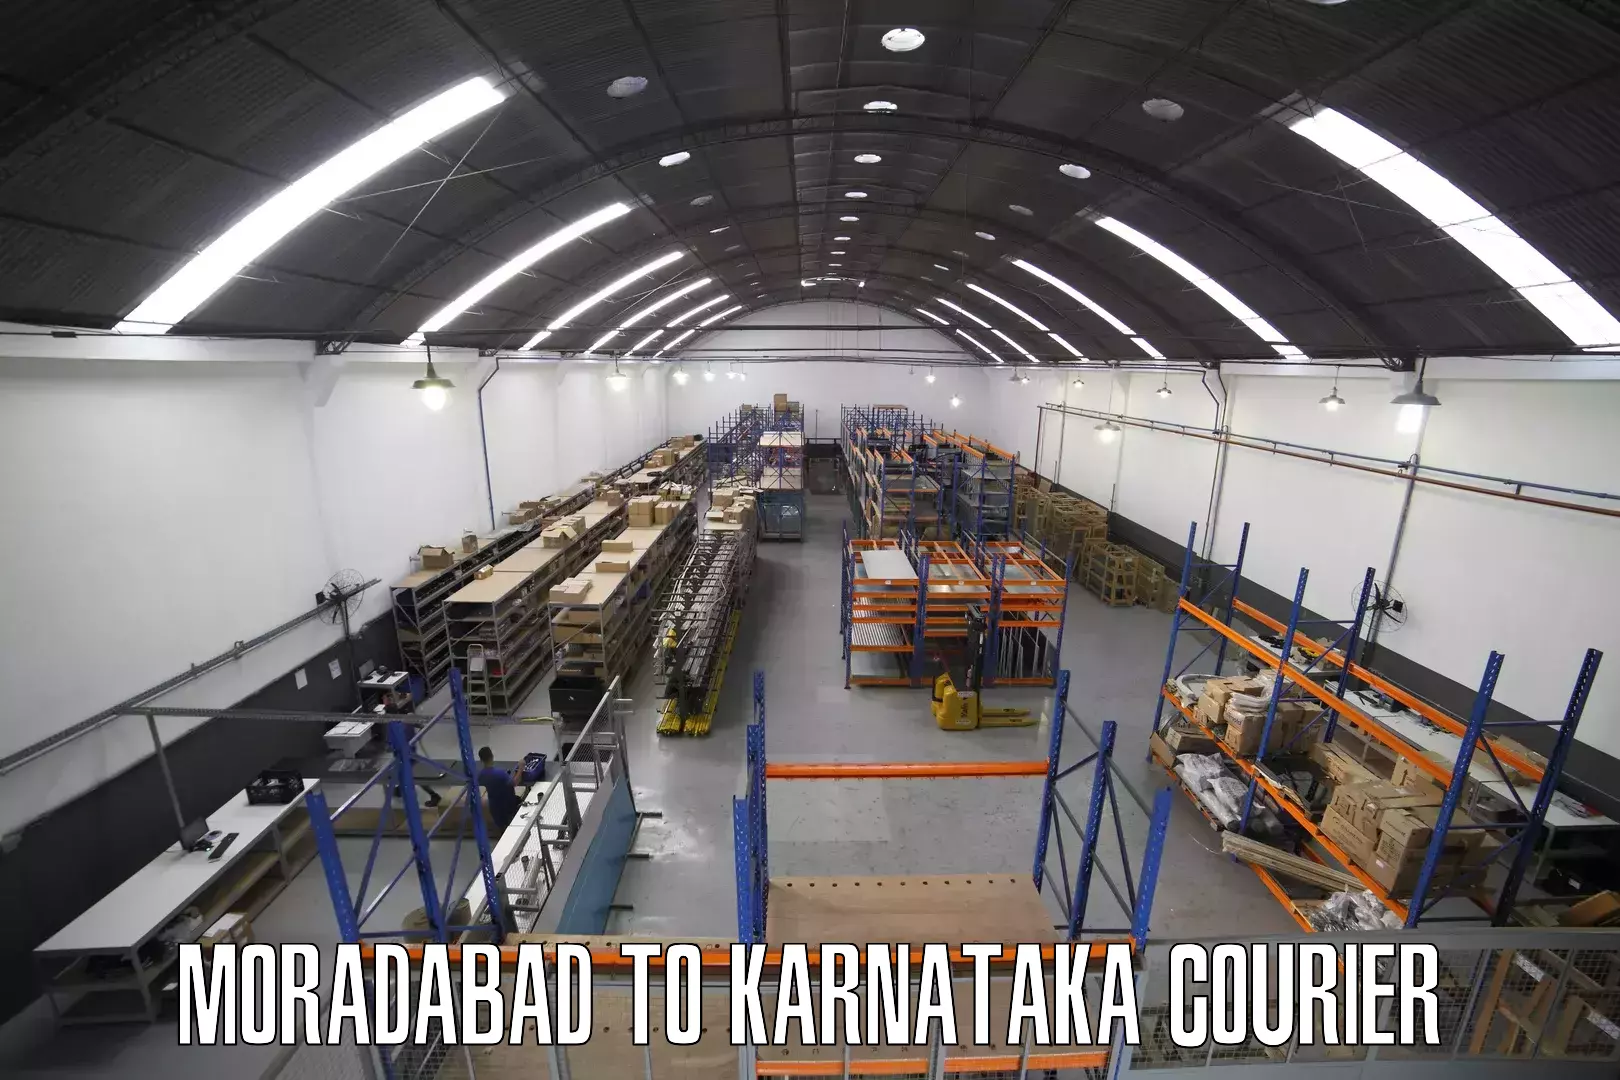 Express delivery capabilities Moradabad to Karnataka